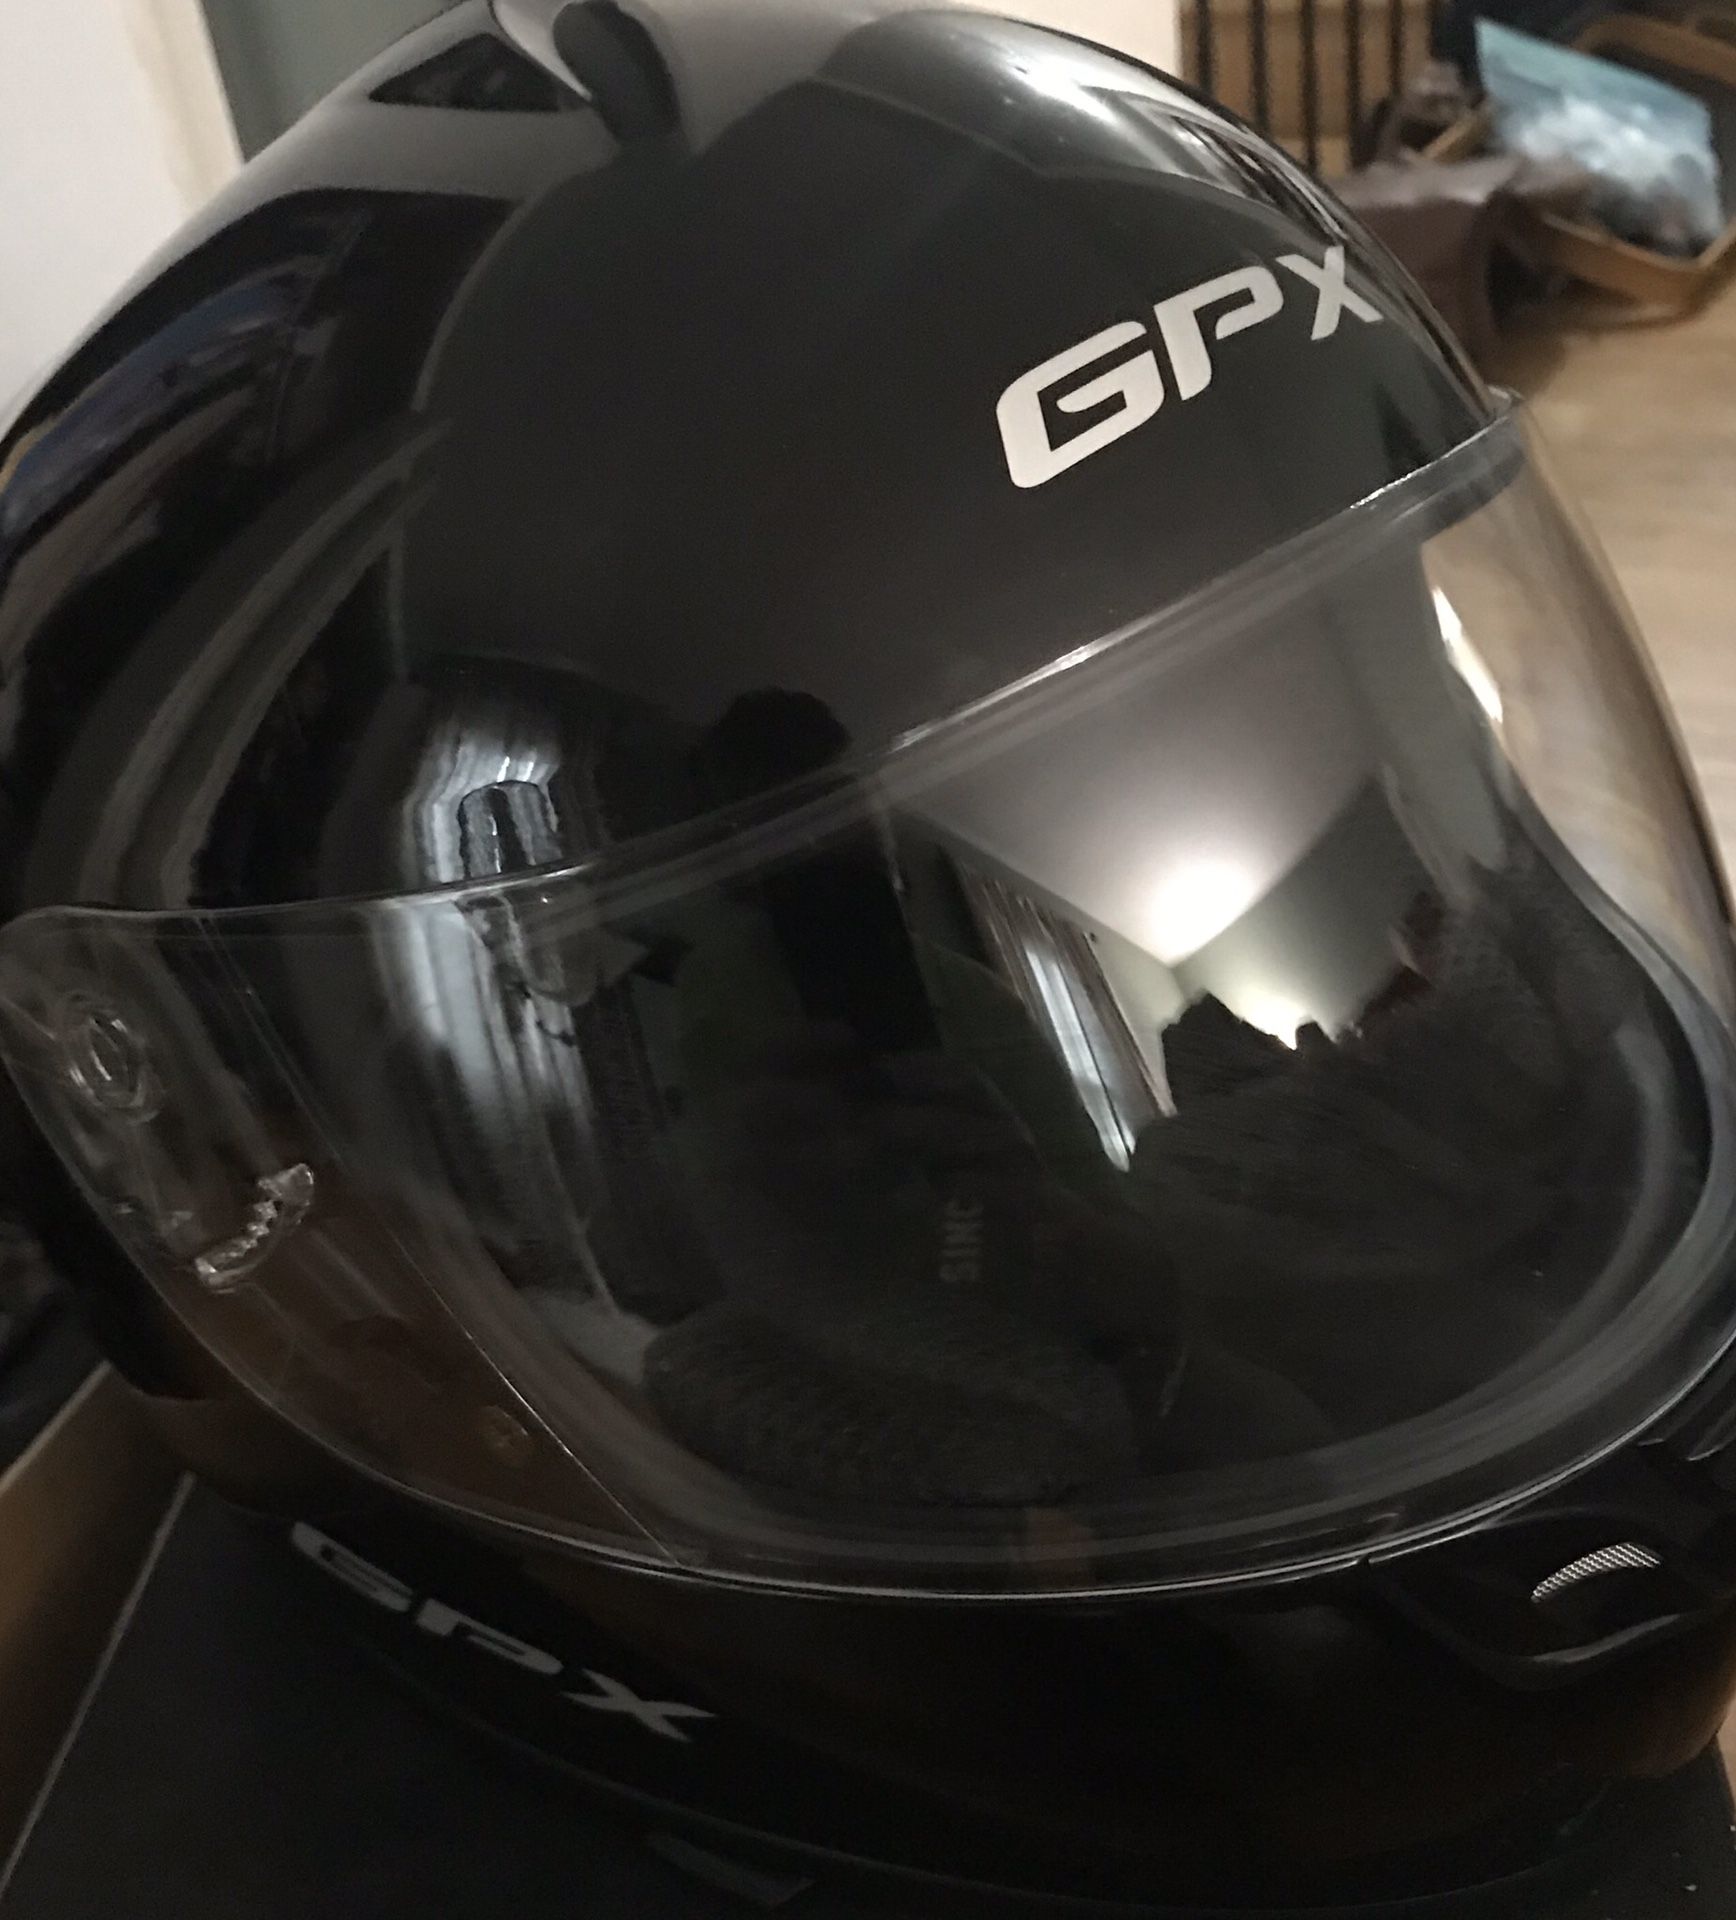 GPX Full Face Motorcycle Helmet